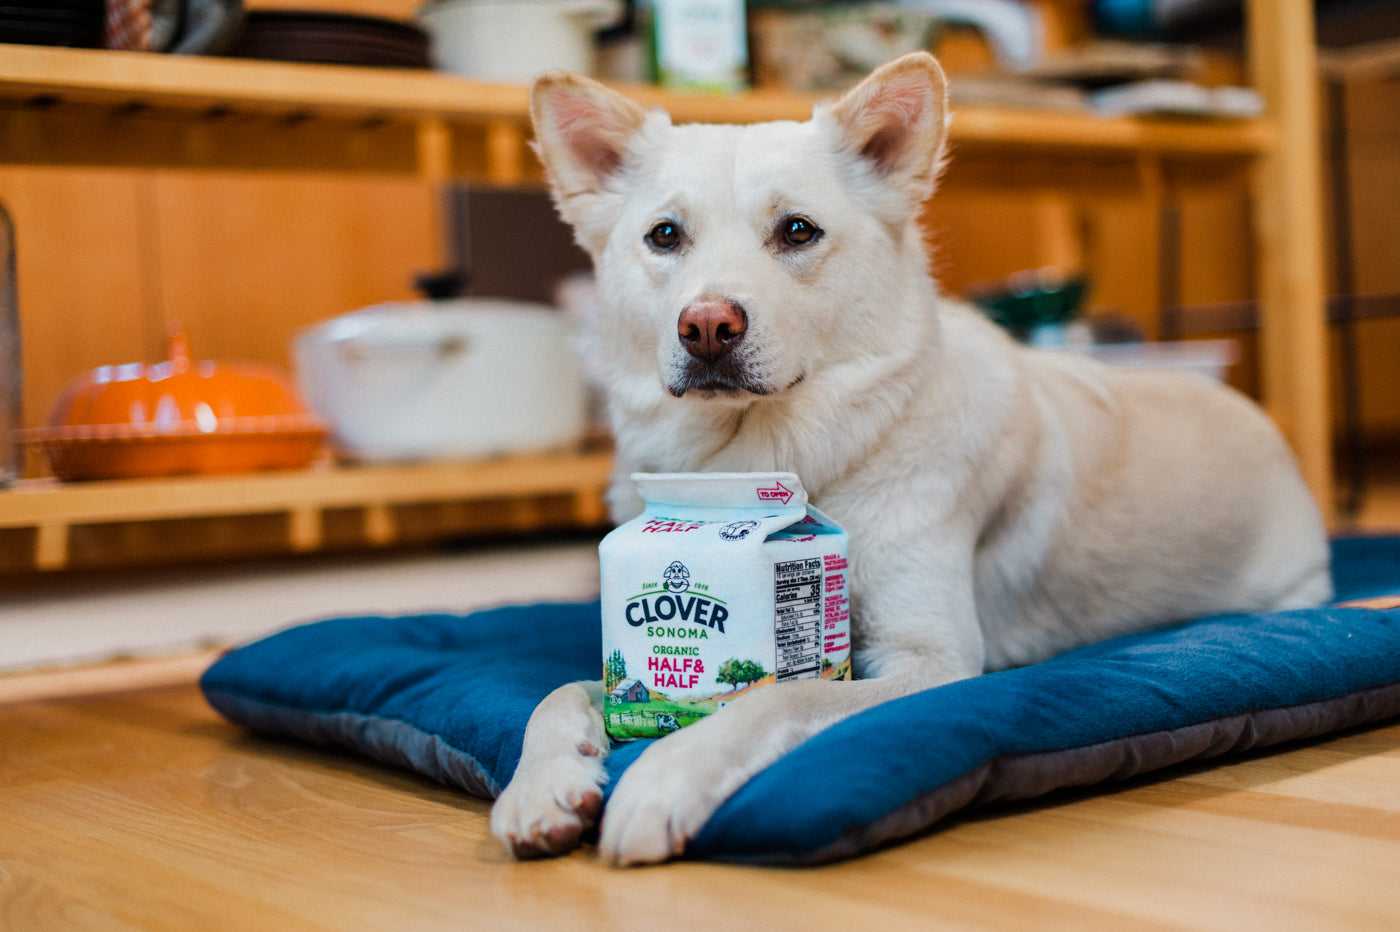 P.L.A.Y. x Clover Sonoma - Canine Milk Carton Toy - Henlo Pets